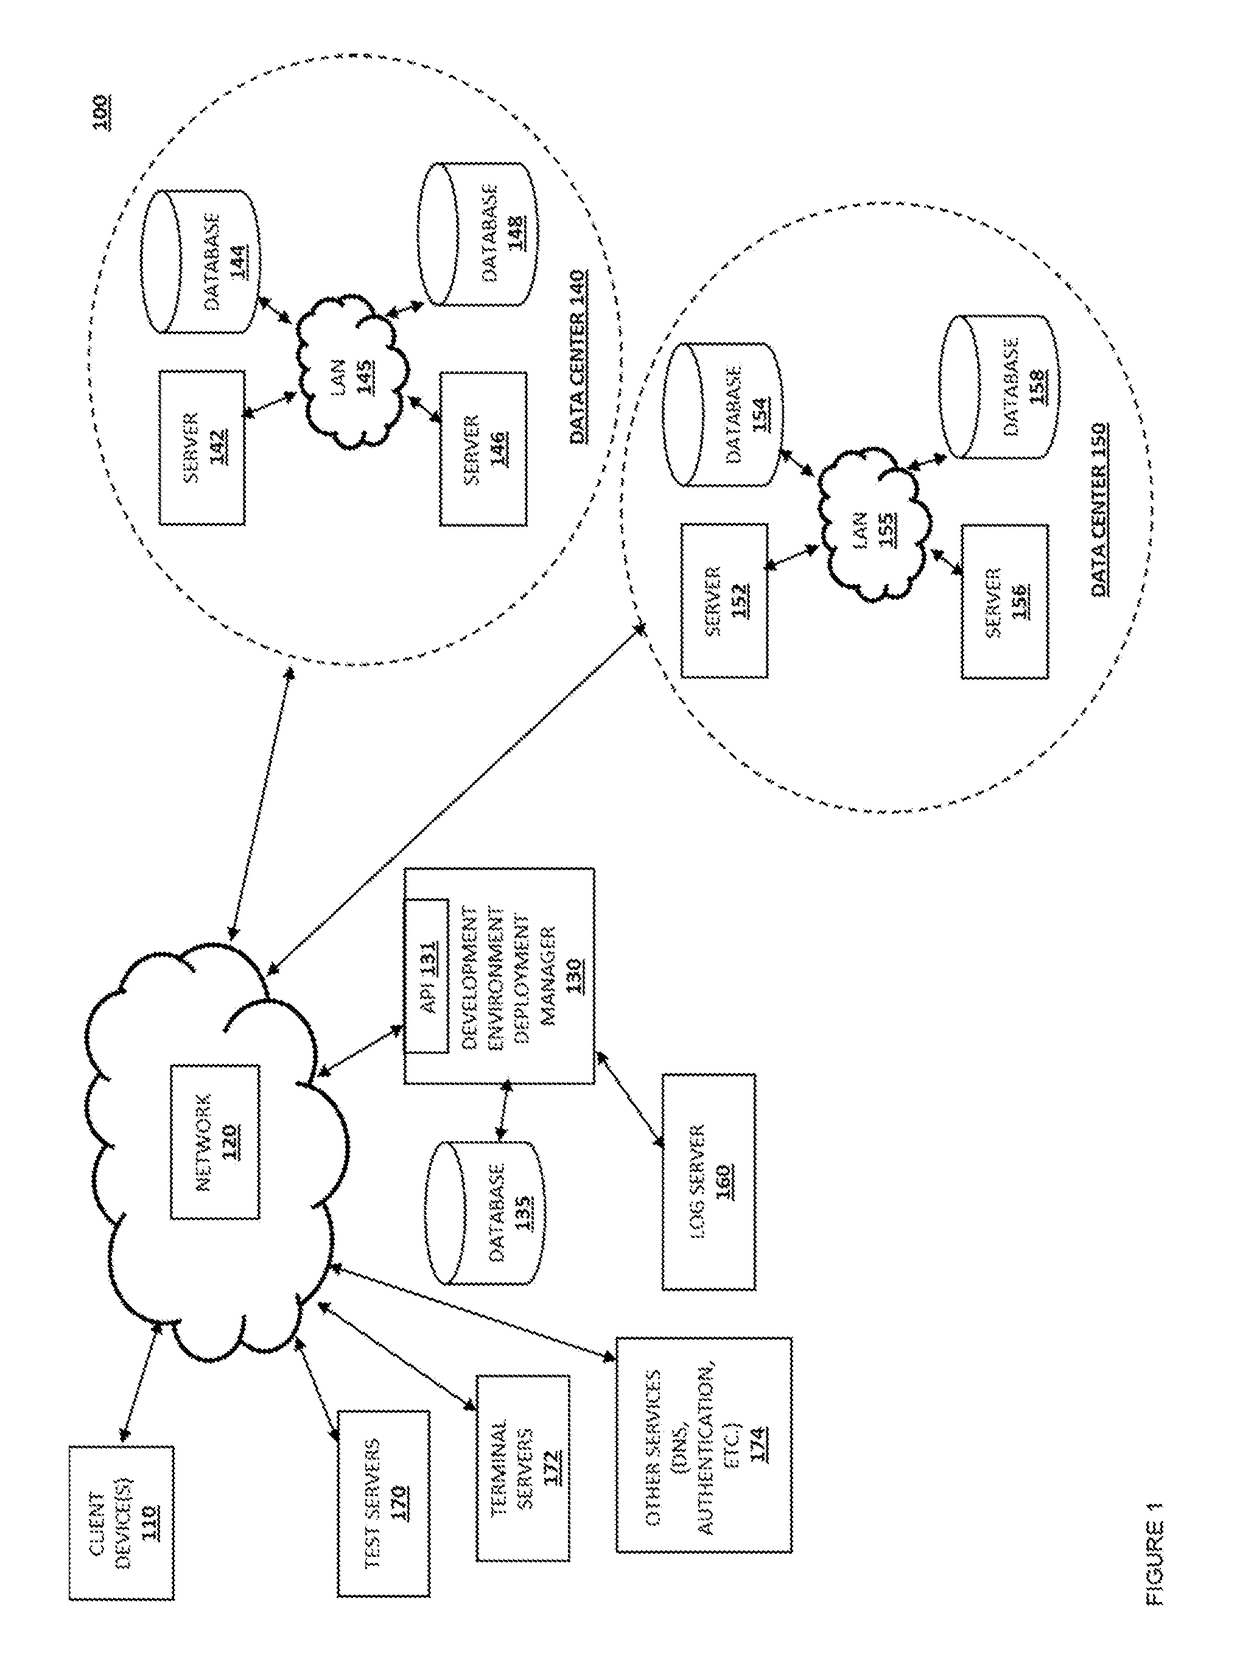 State machine representation of a development environment deployment process